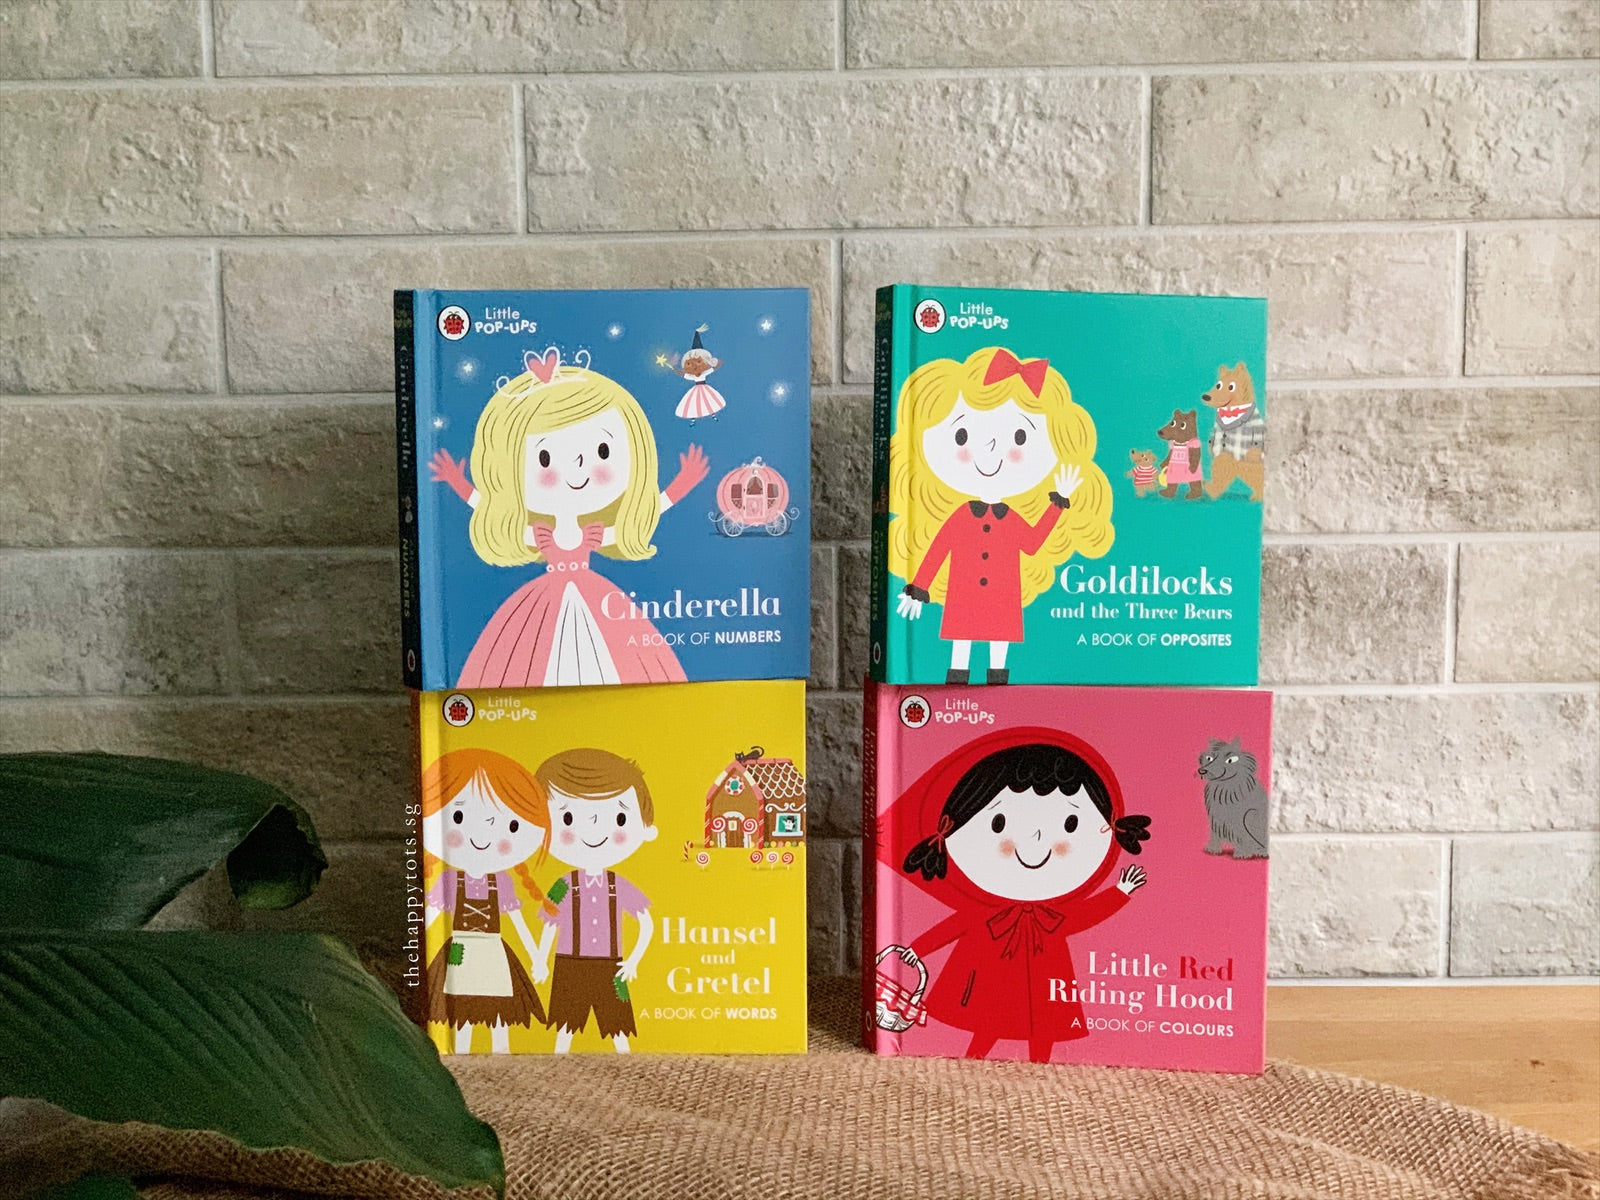 [BOOK SET] Little Pop-Ups Fairytales Series